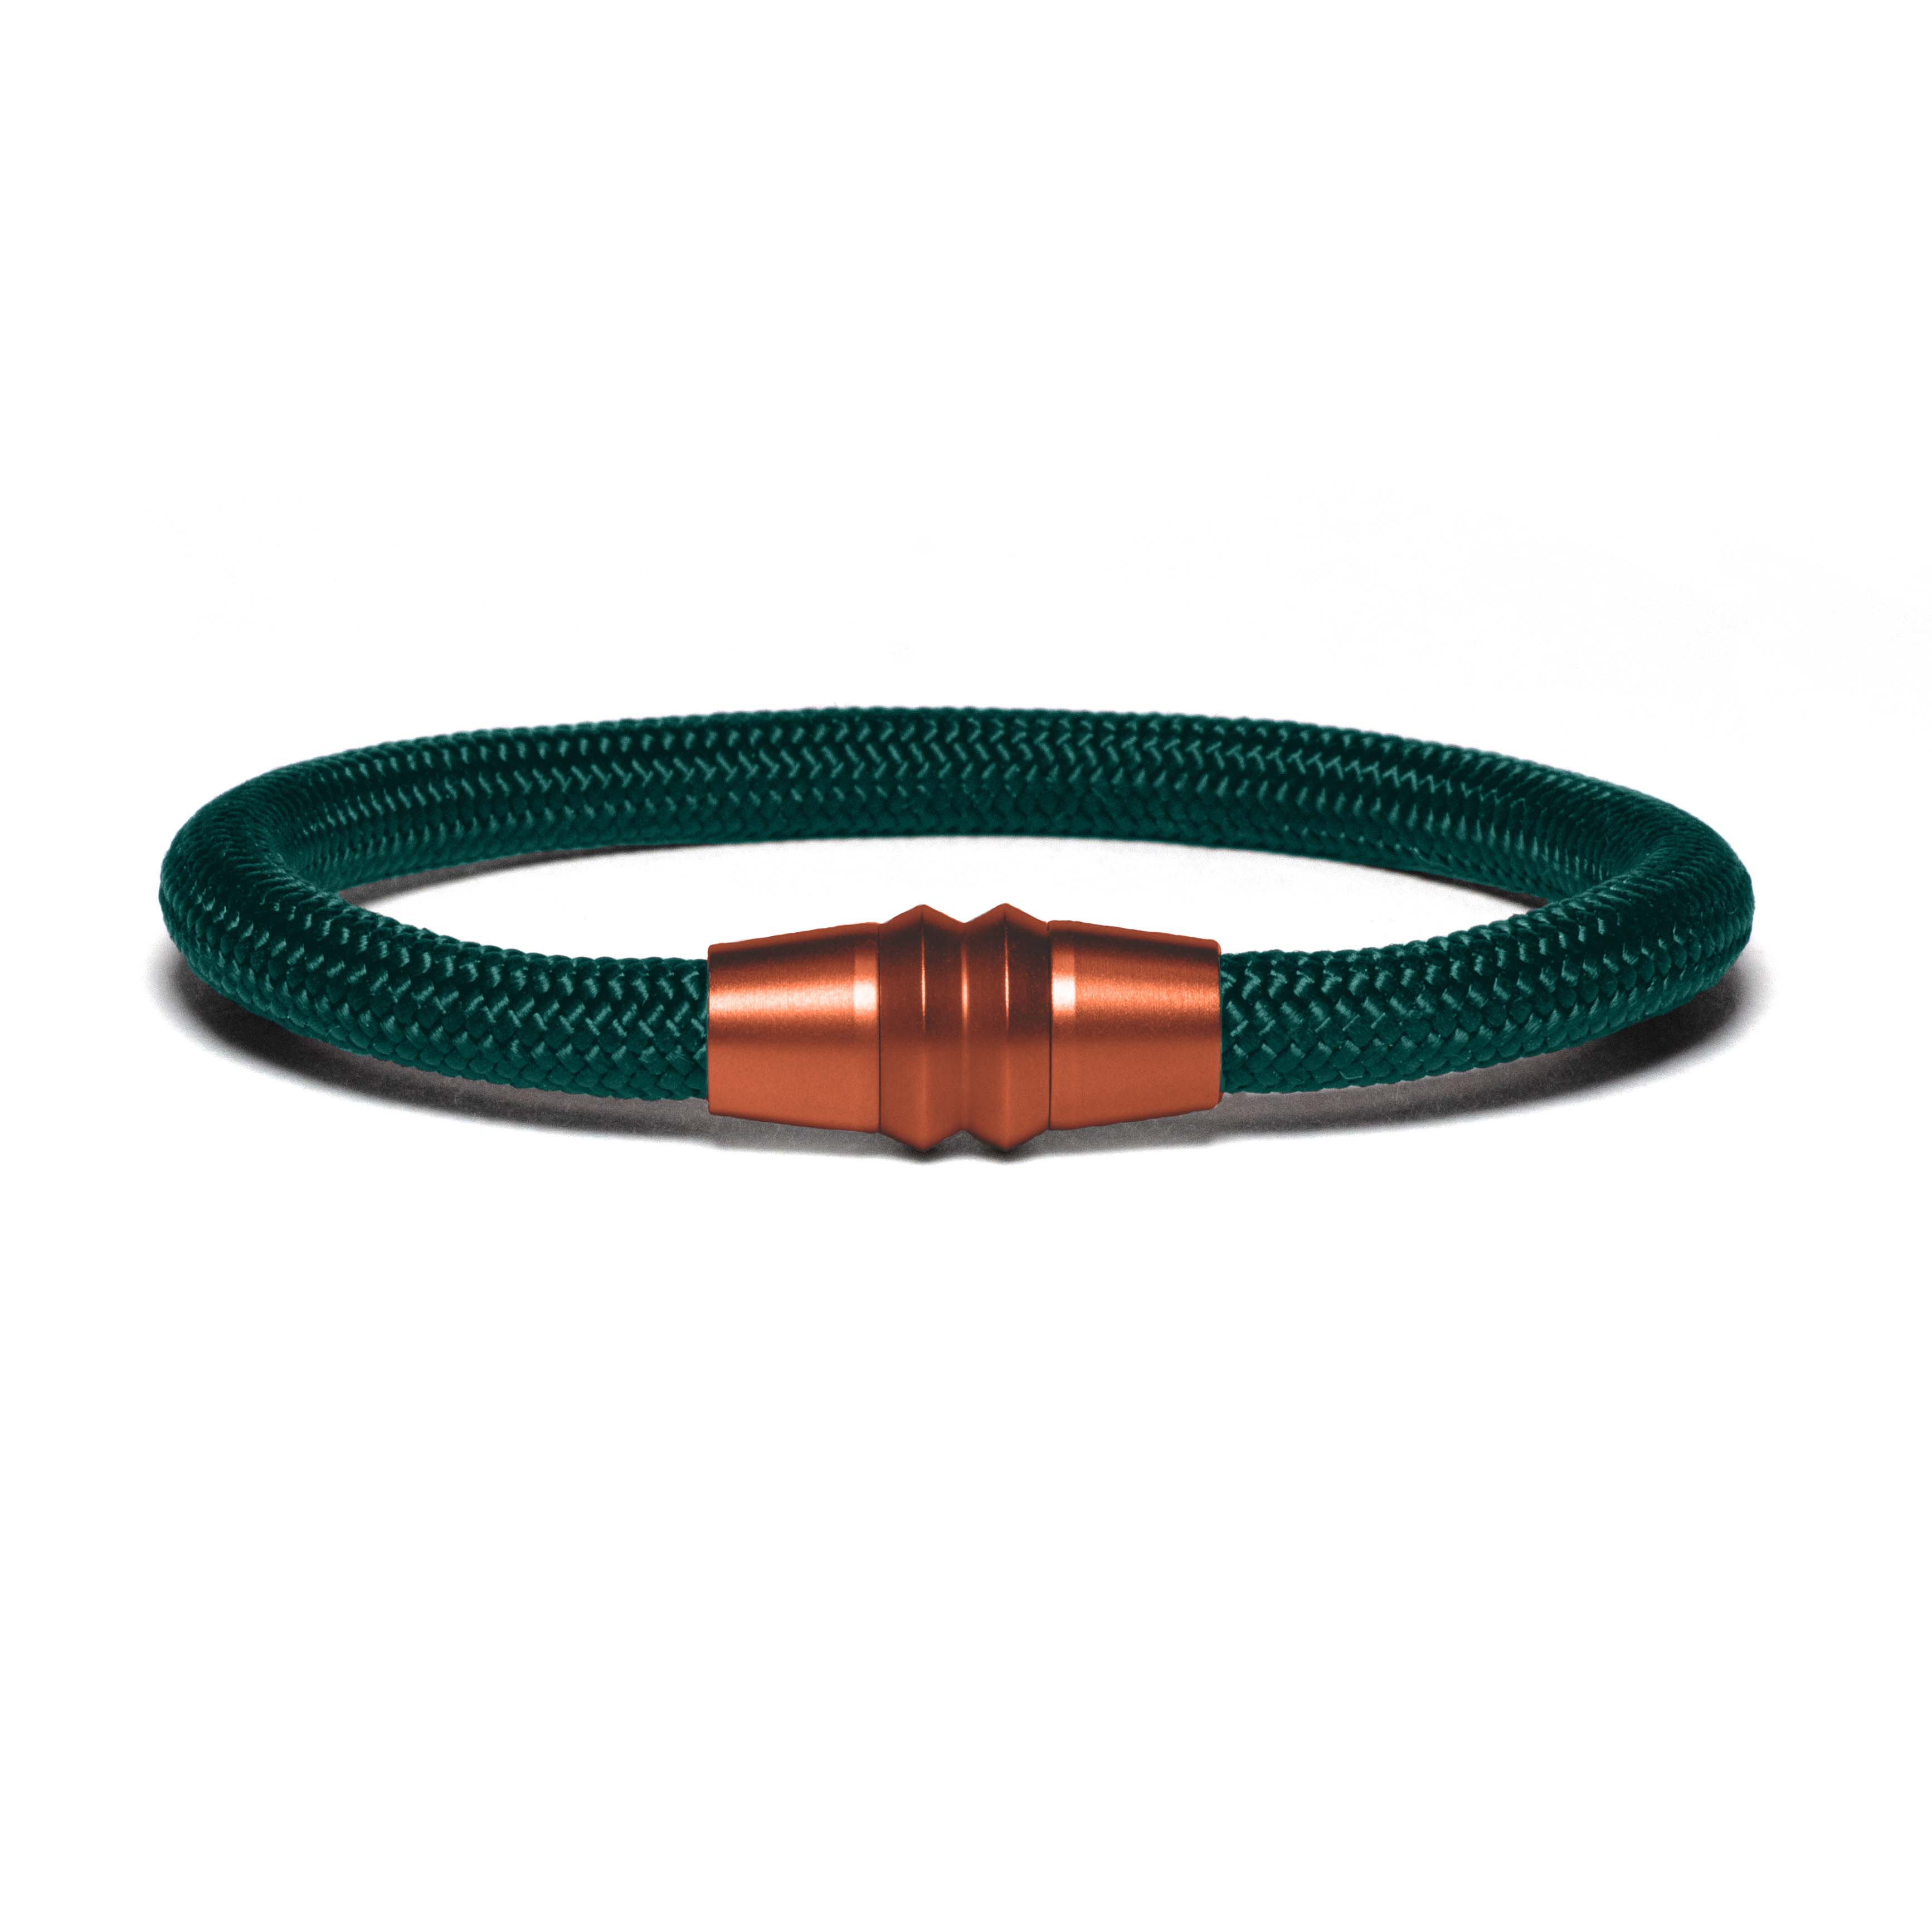 Copper PVD bracelet - dark green paracord